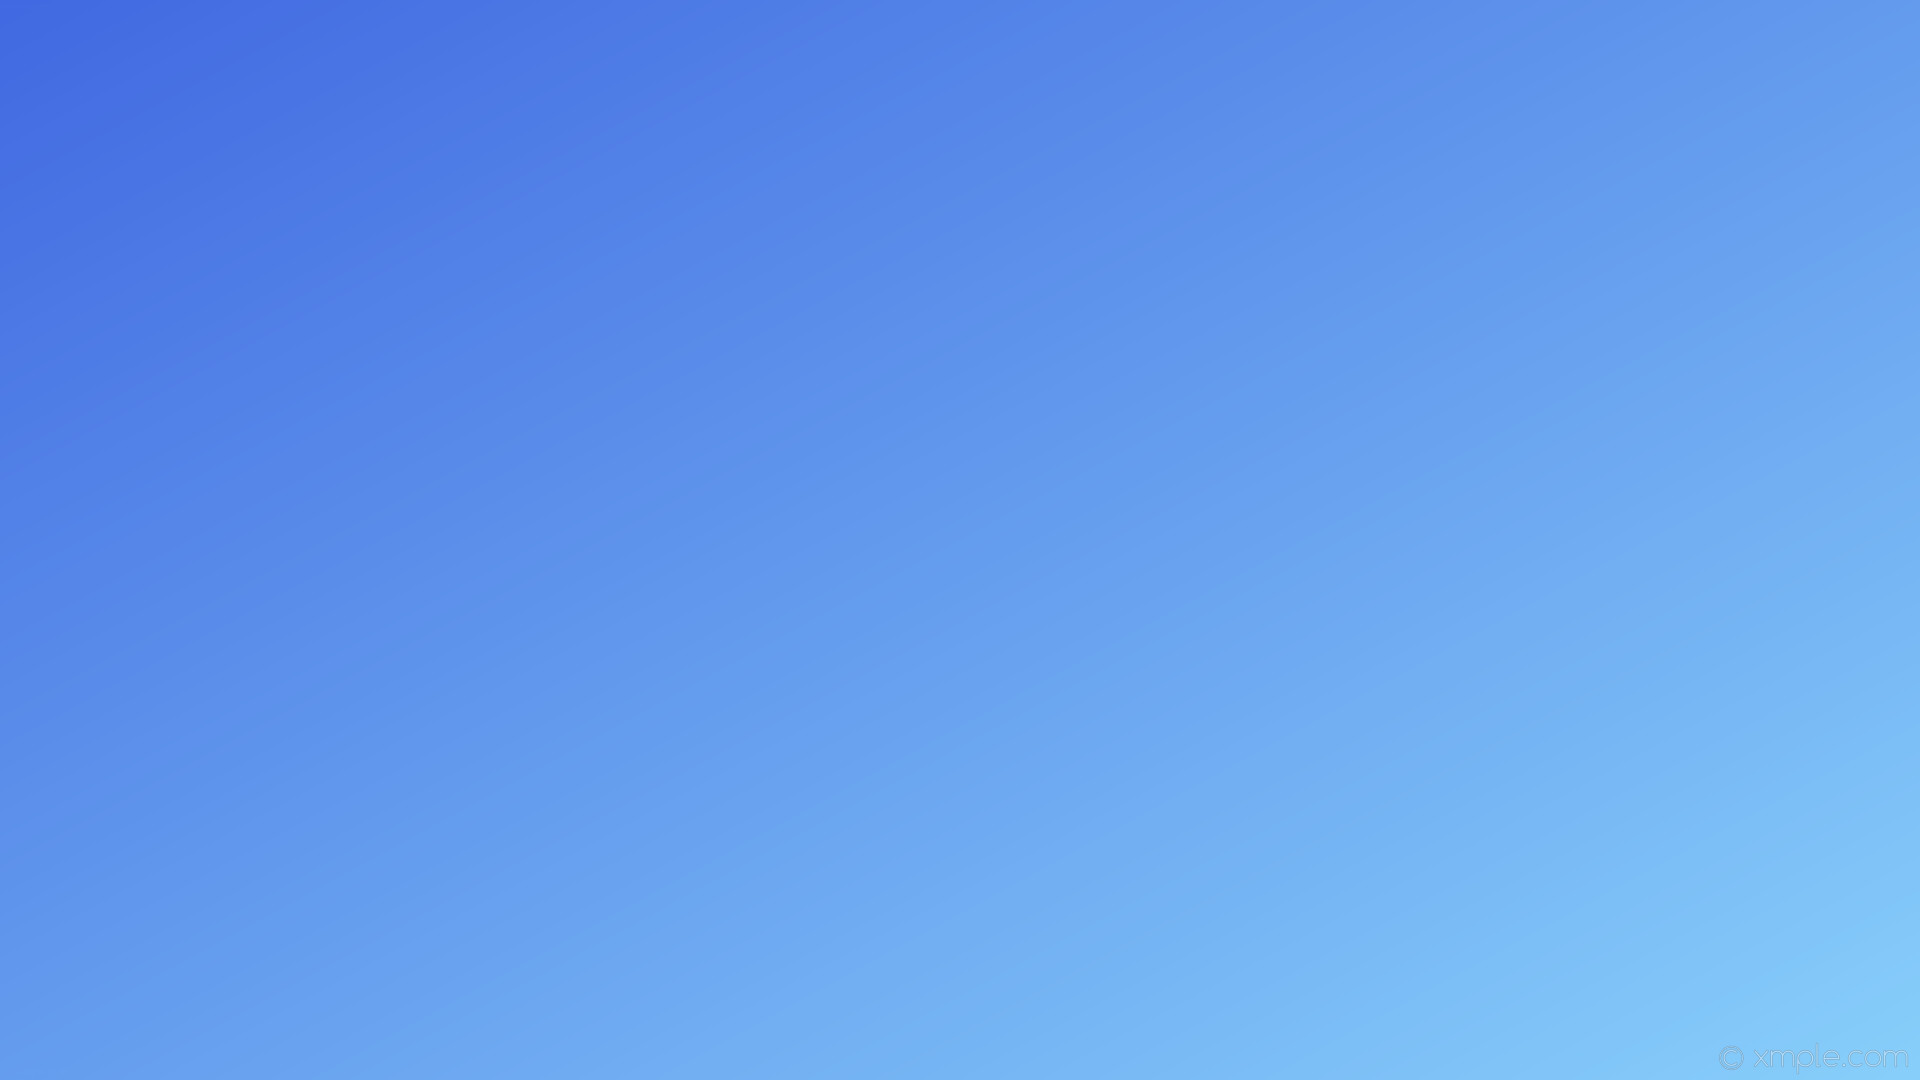 1920x1080 wallpaper linear blue gradient royal blue light sky blue #4169e1 #87cefa  150Â°